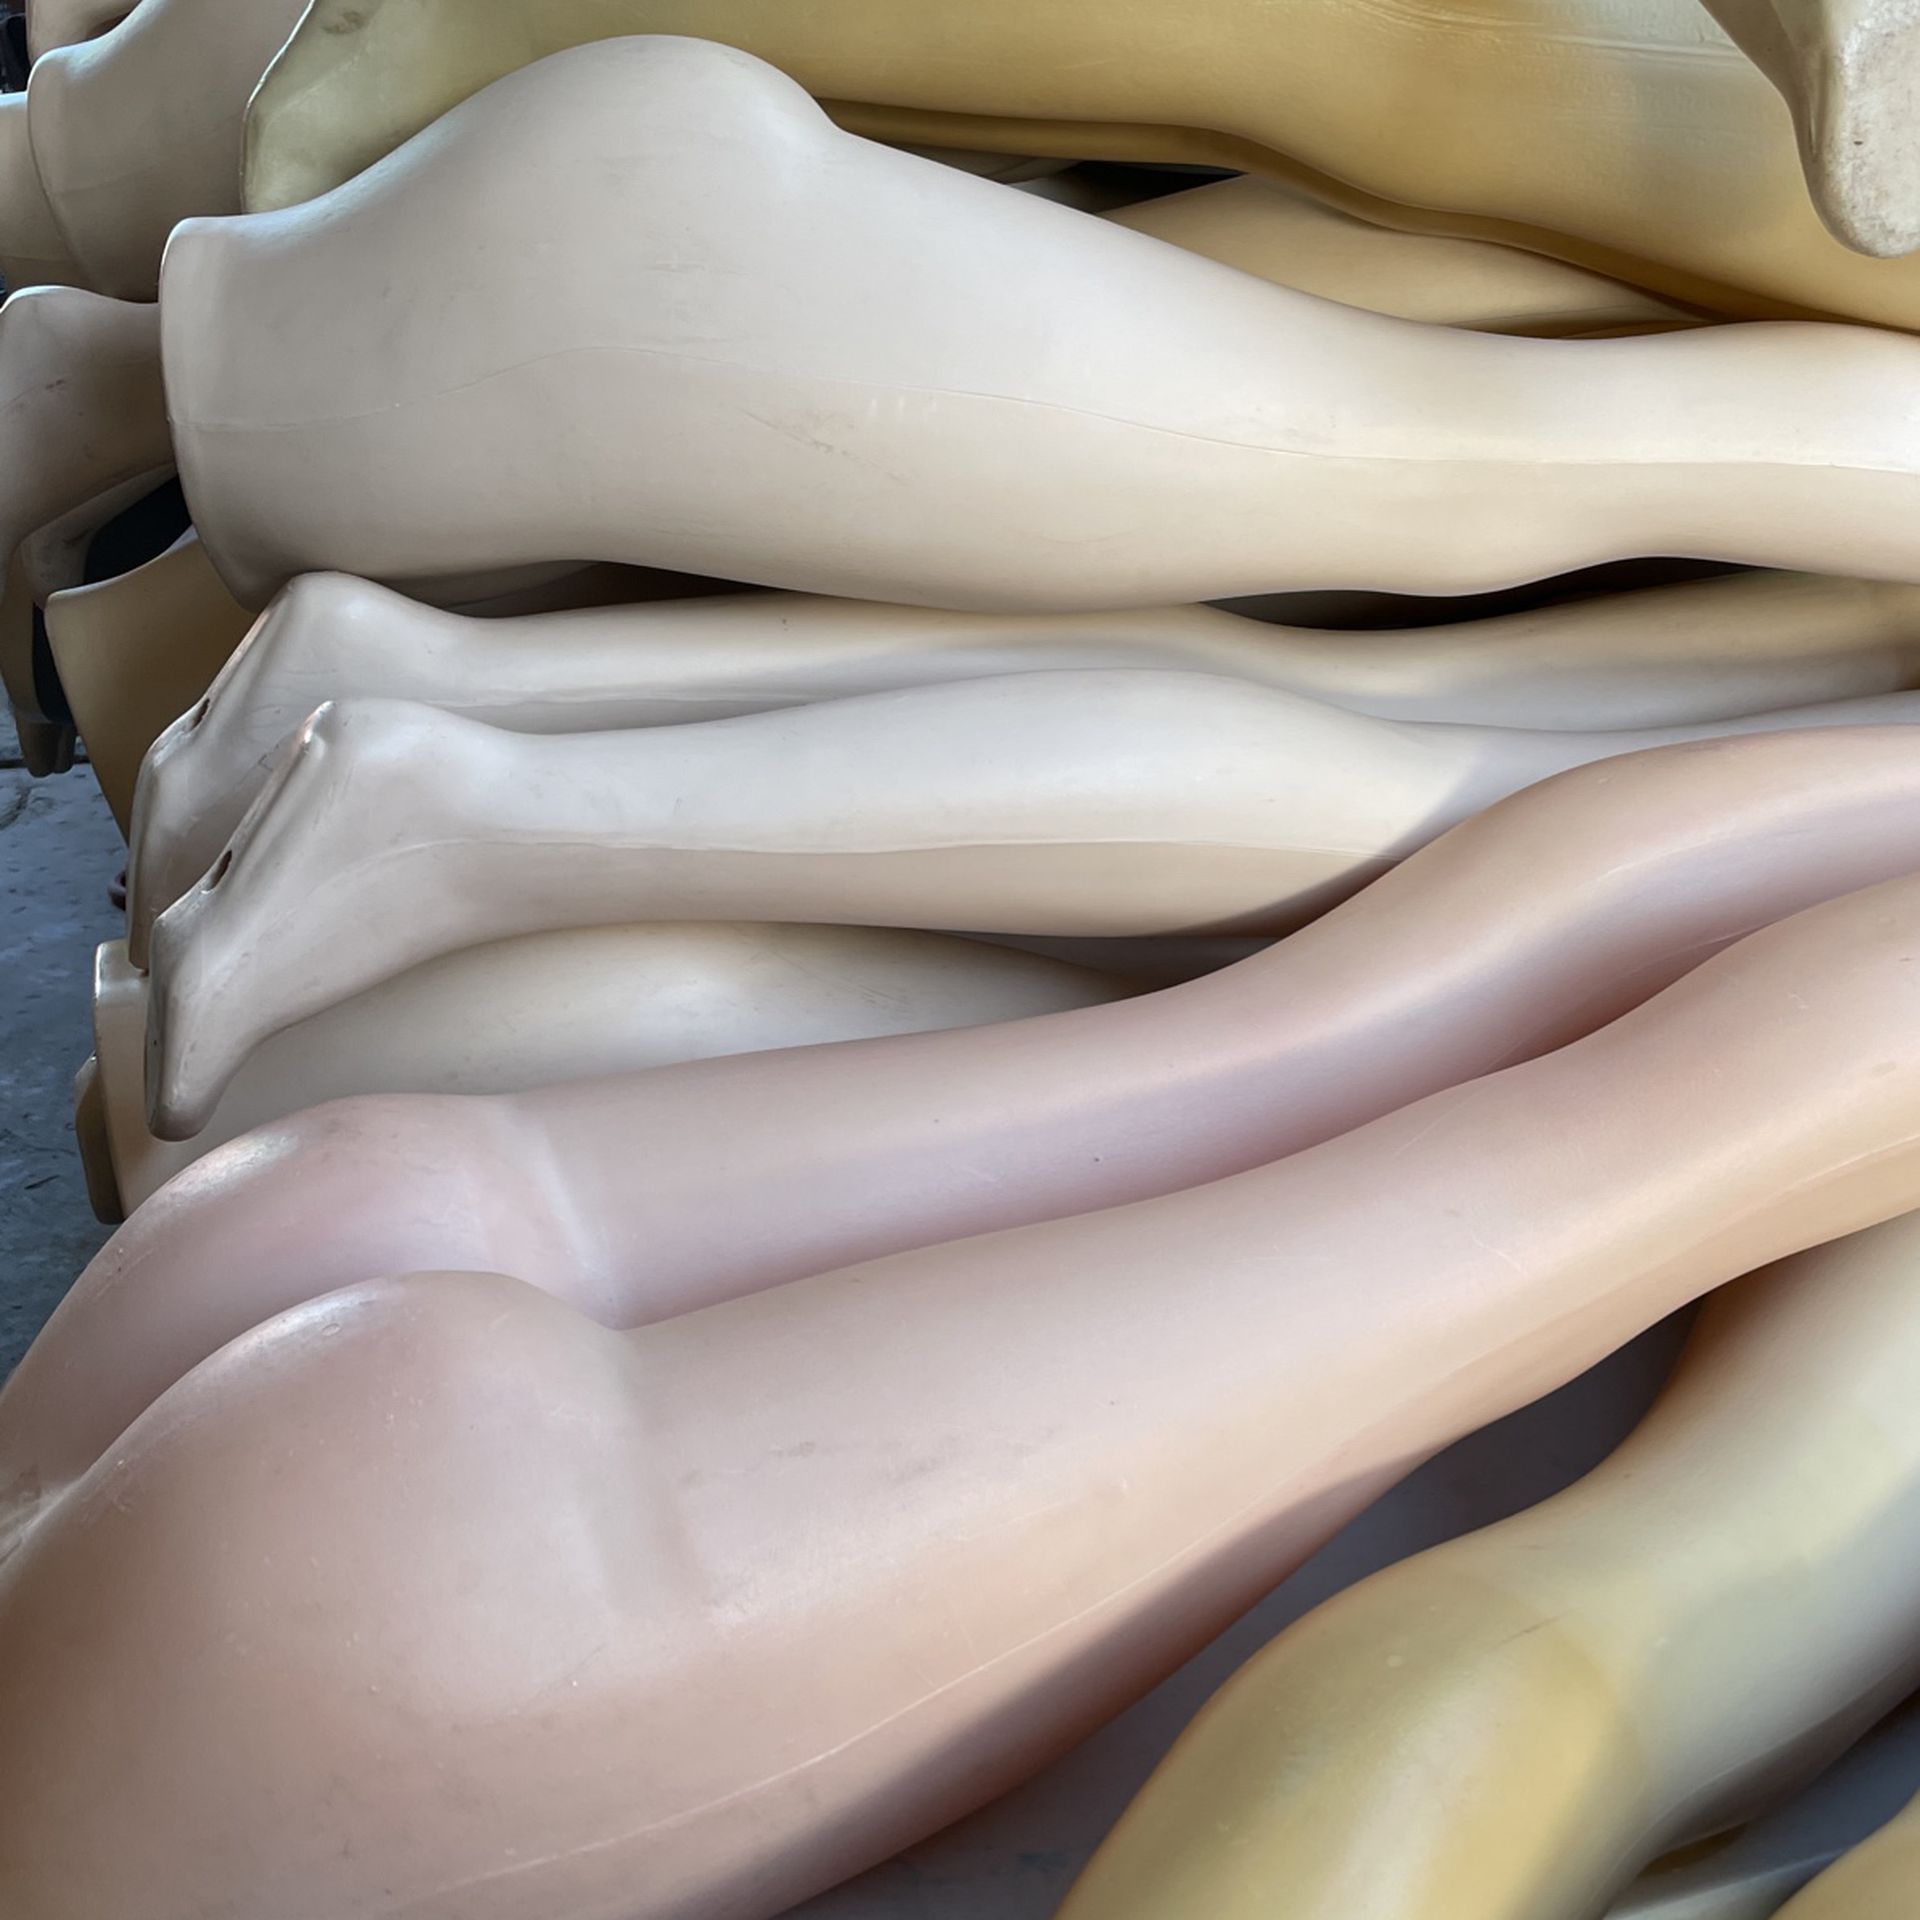 Brazilian Style Half Body Mannequin - Female Pants Exhibitor with Folded  Leg & Metal Base, 1 - Kroger